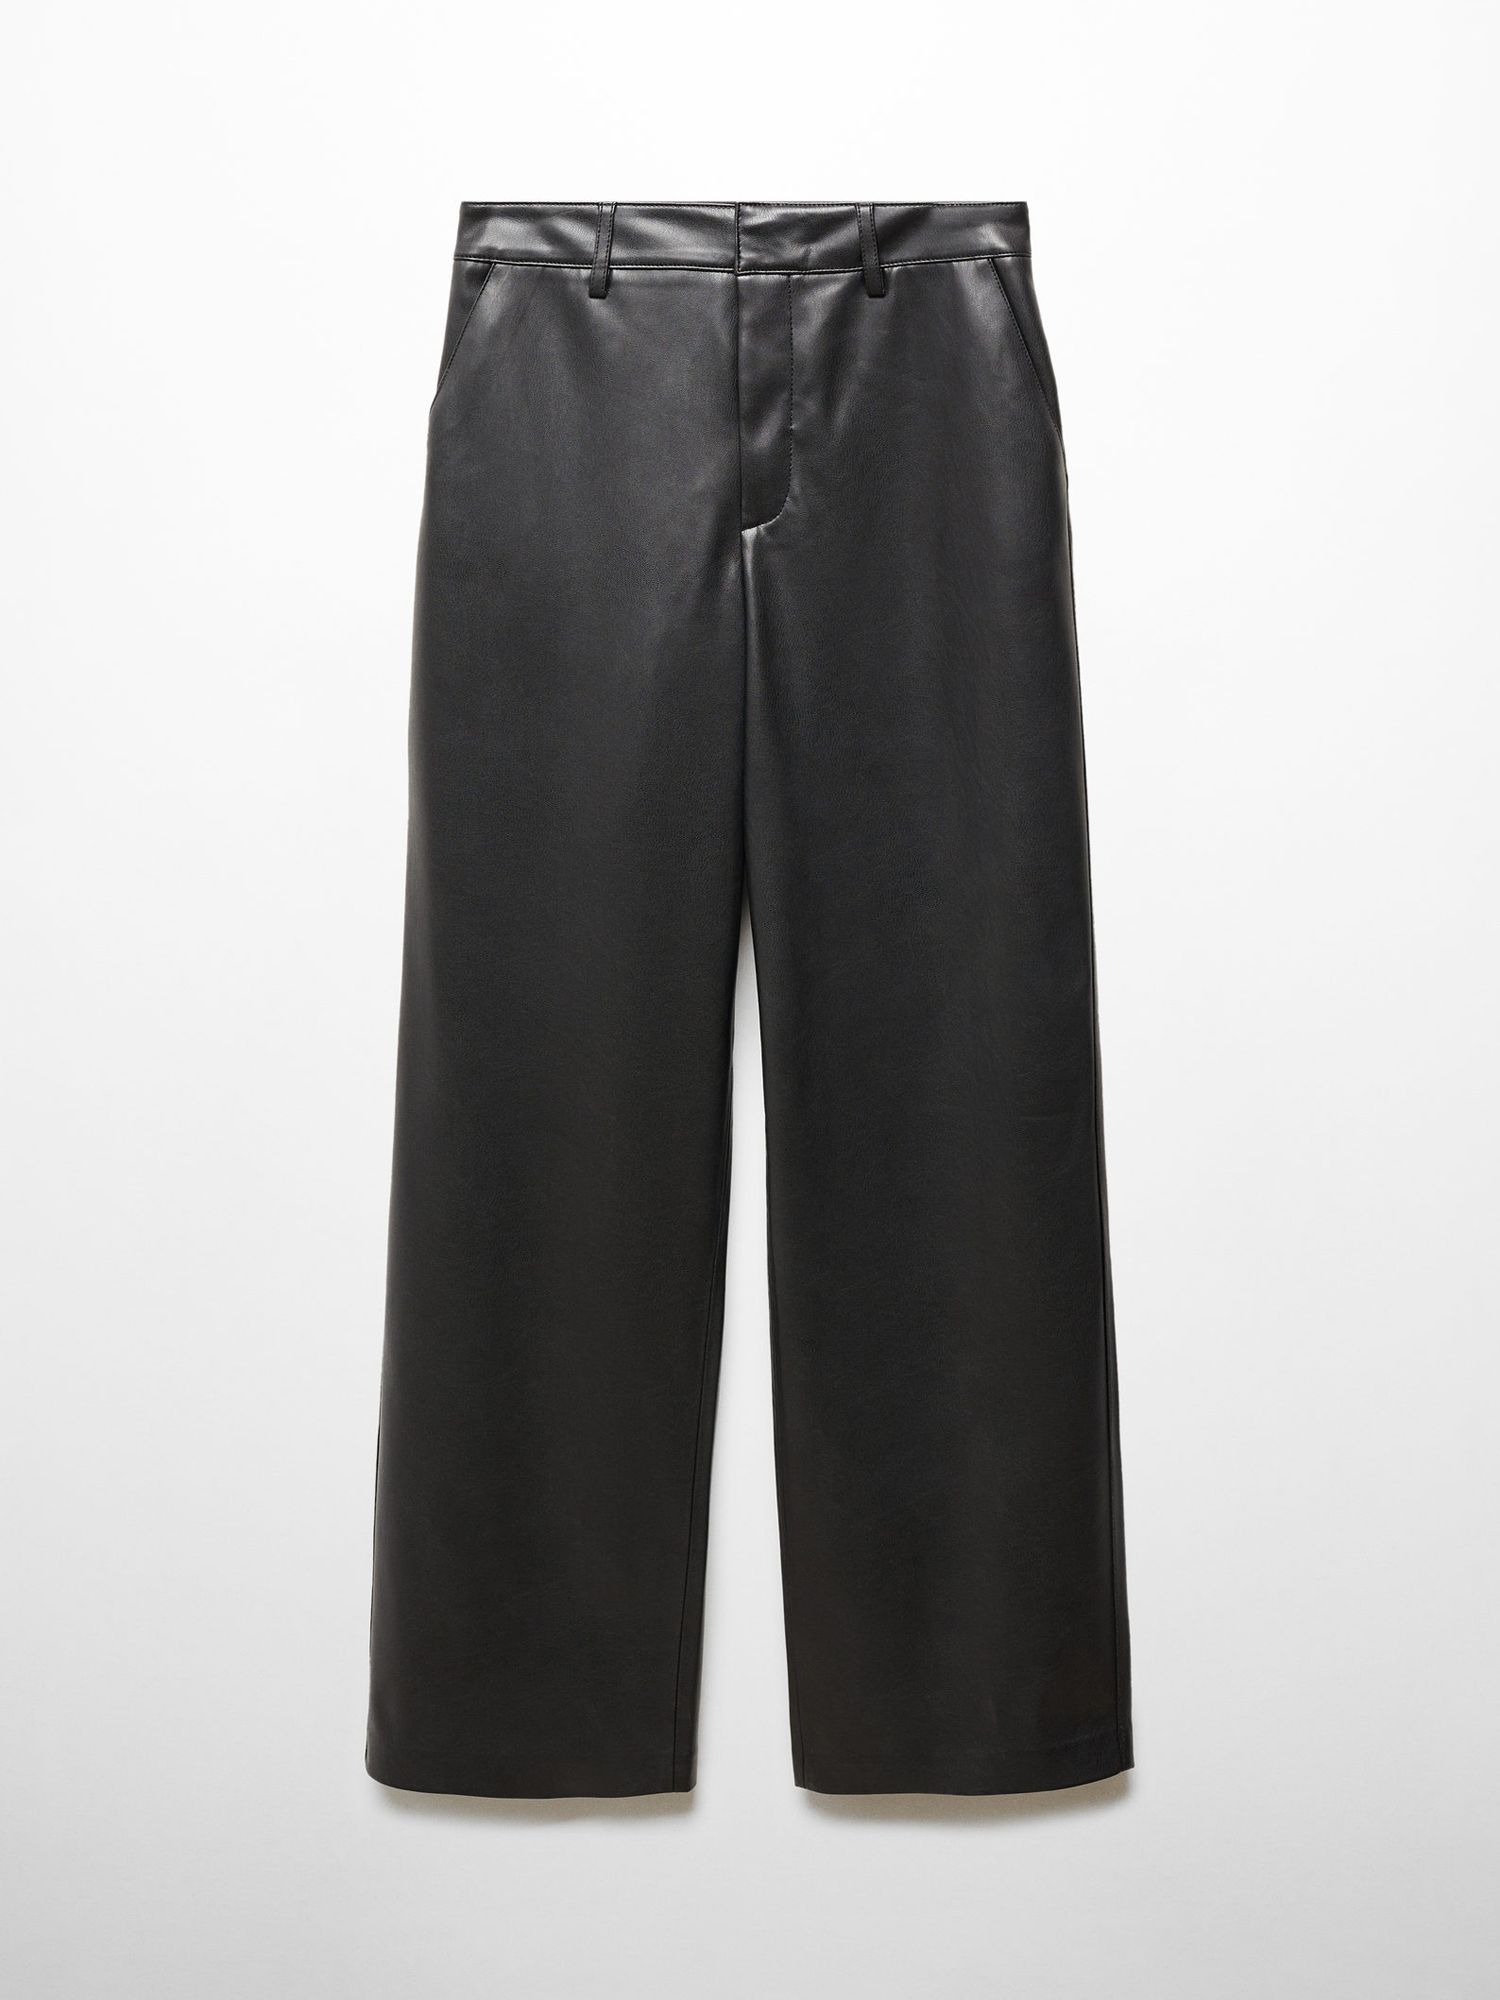 Mango Mali Faux Leather High Waist Trousers, Black, 8